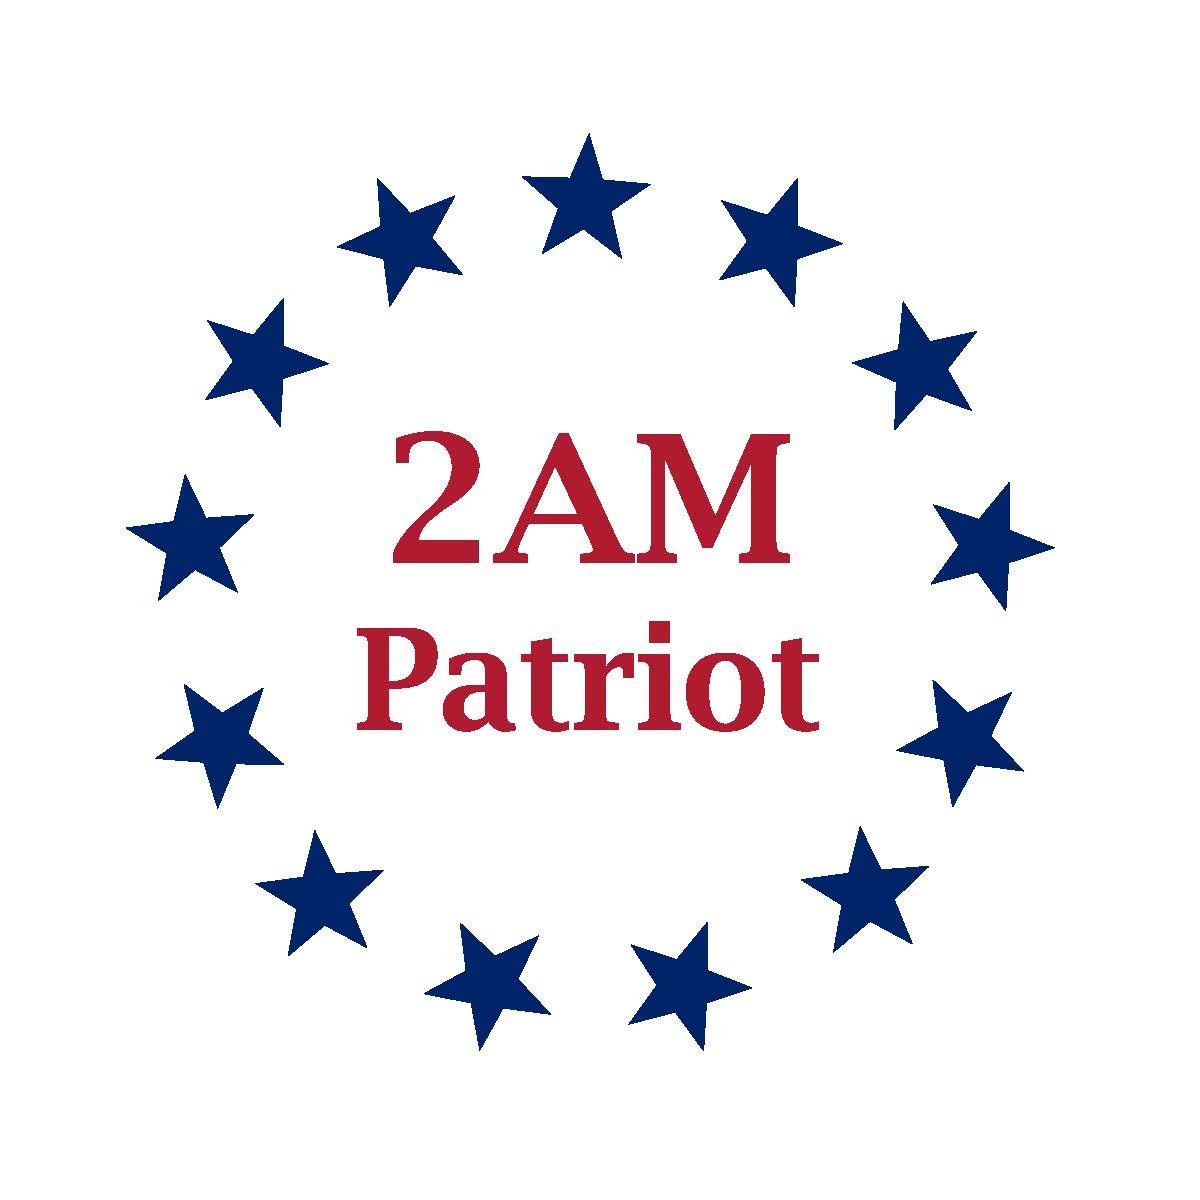 2AM Patriot